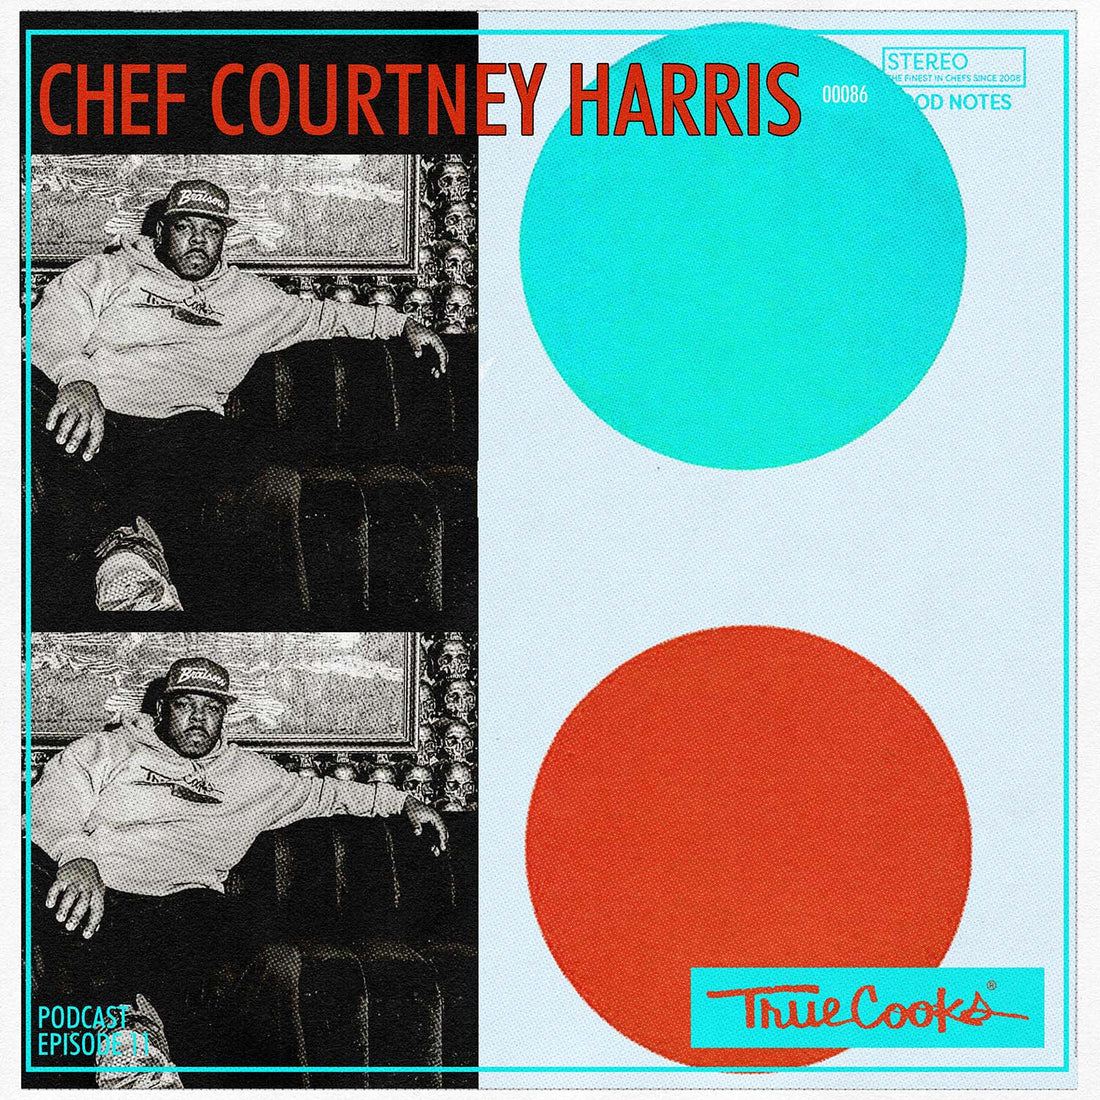 Truecooks Podcast Episode 11 : Chef Courtney Harris - TrueCooks